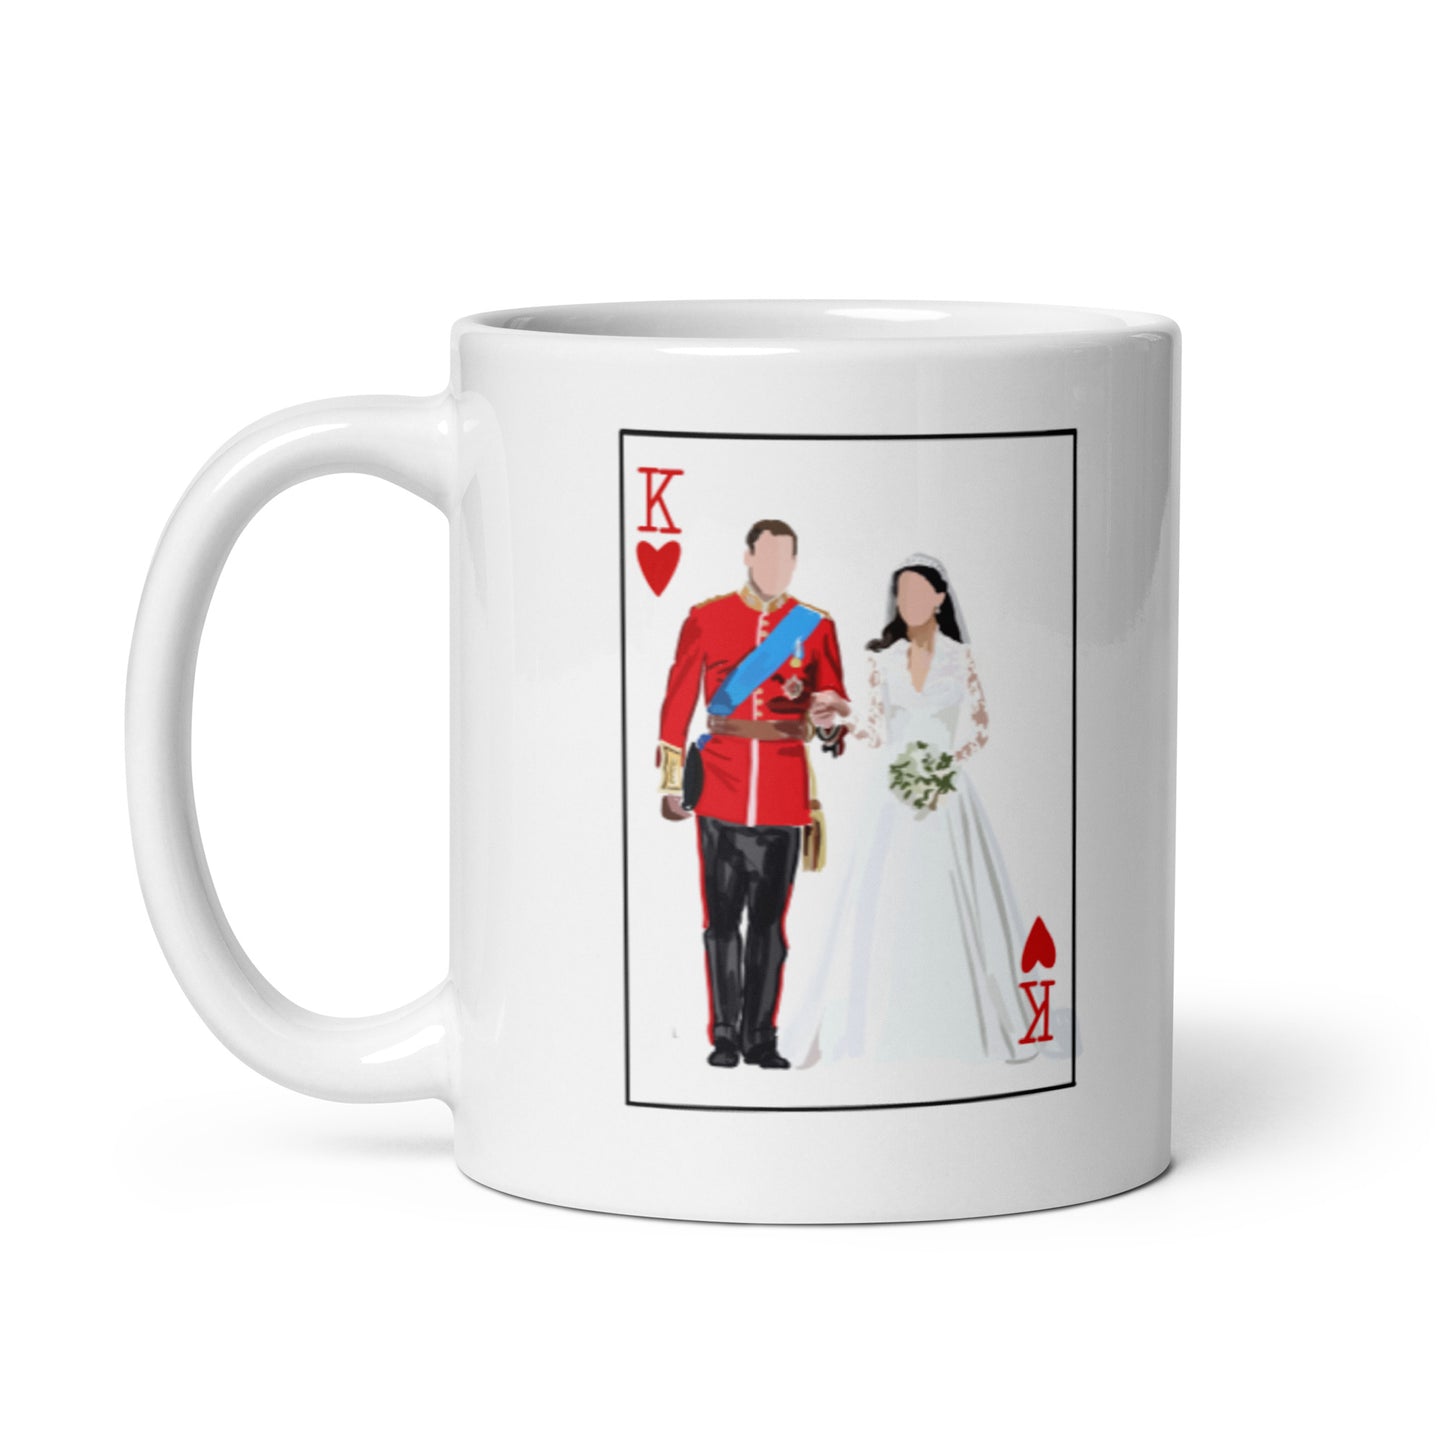 King of hearts with the princess and prince of wales White glossy mug